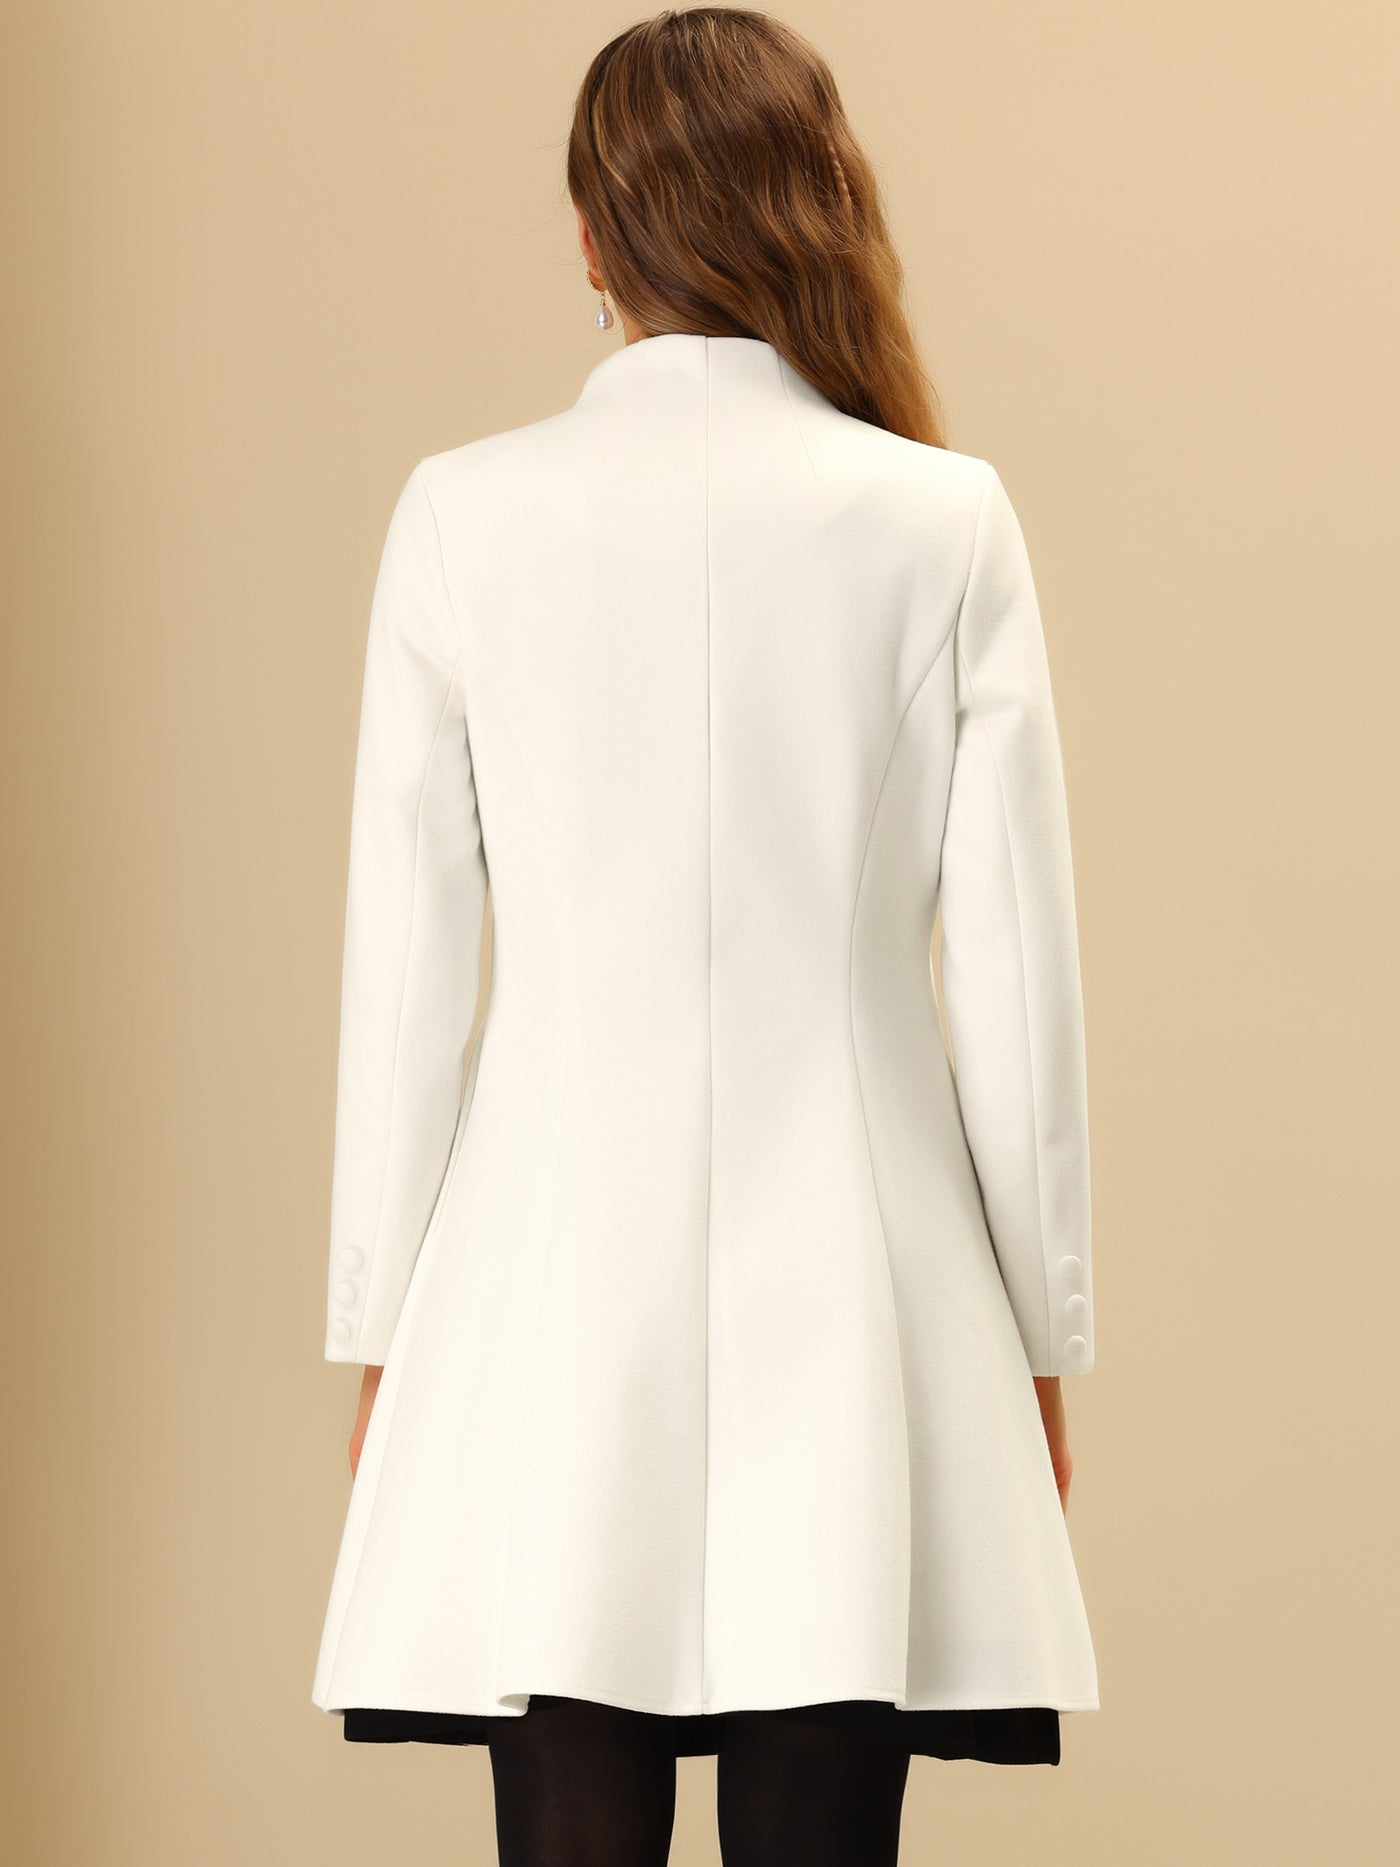 Allegra K Single Breasted Long Sleeve Mid-Long Winter Coat